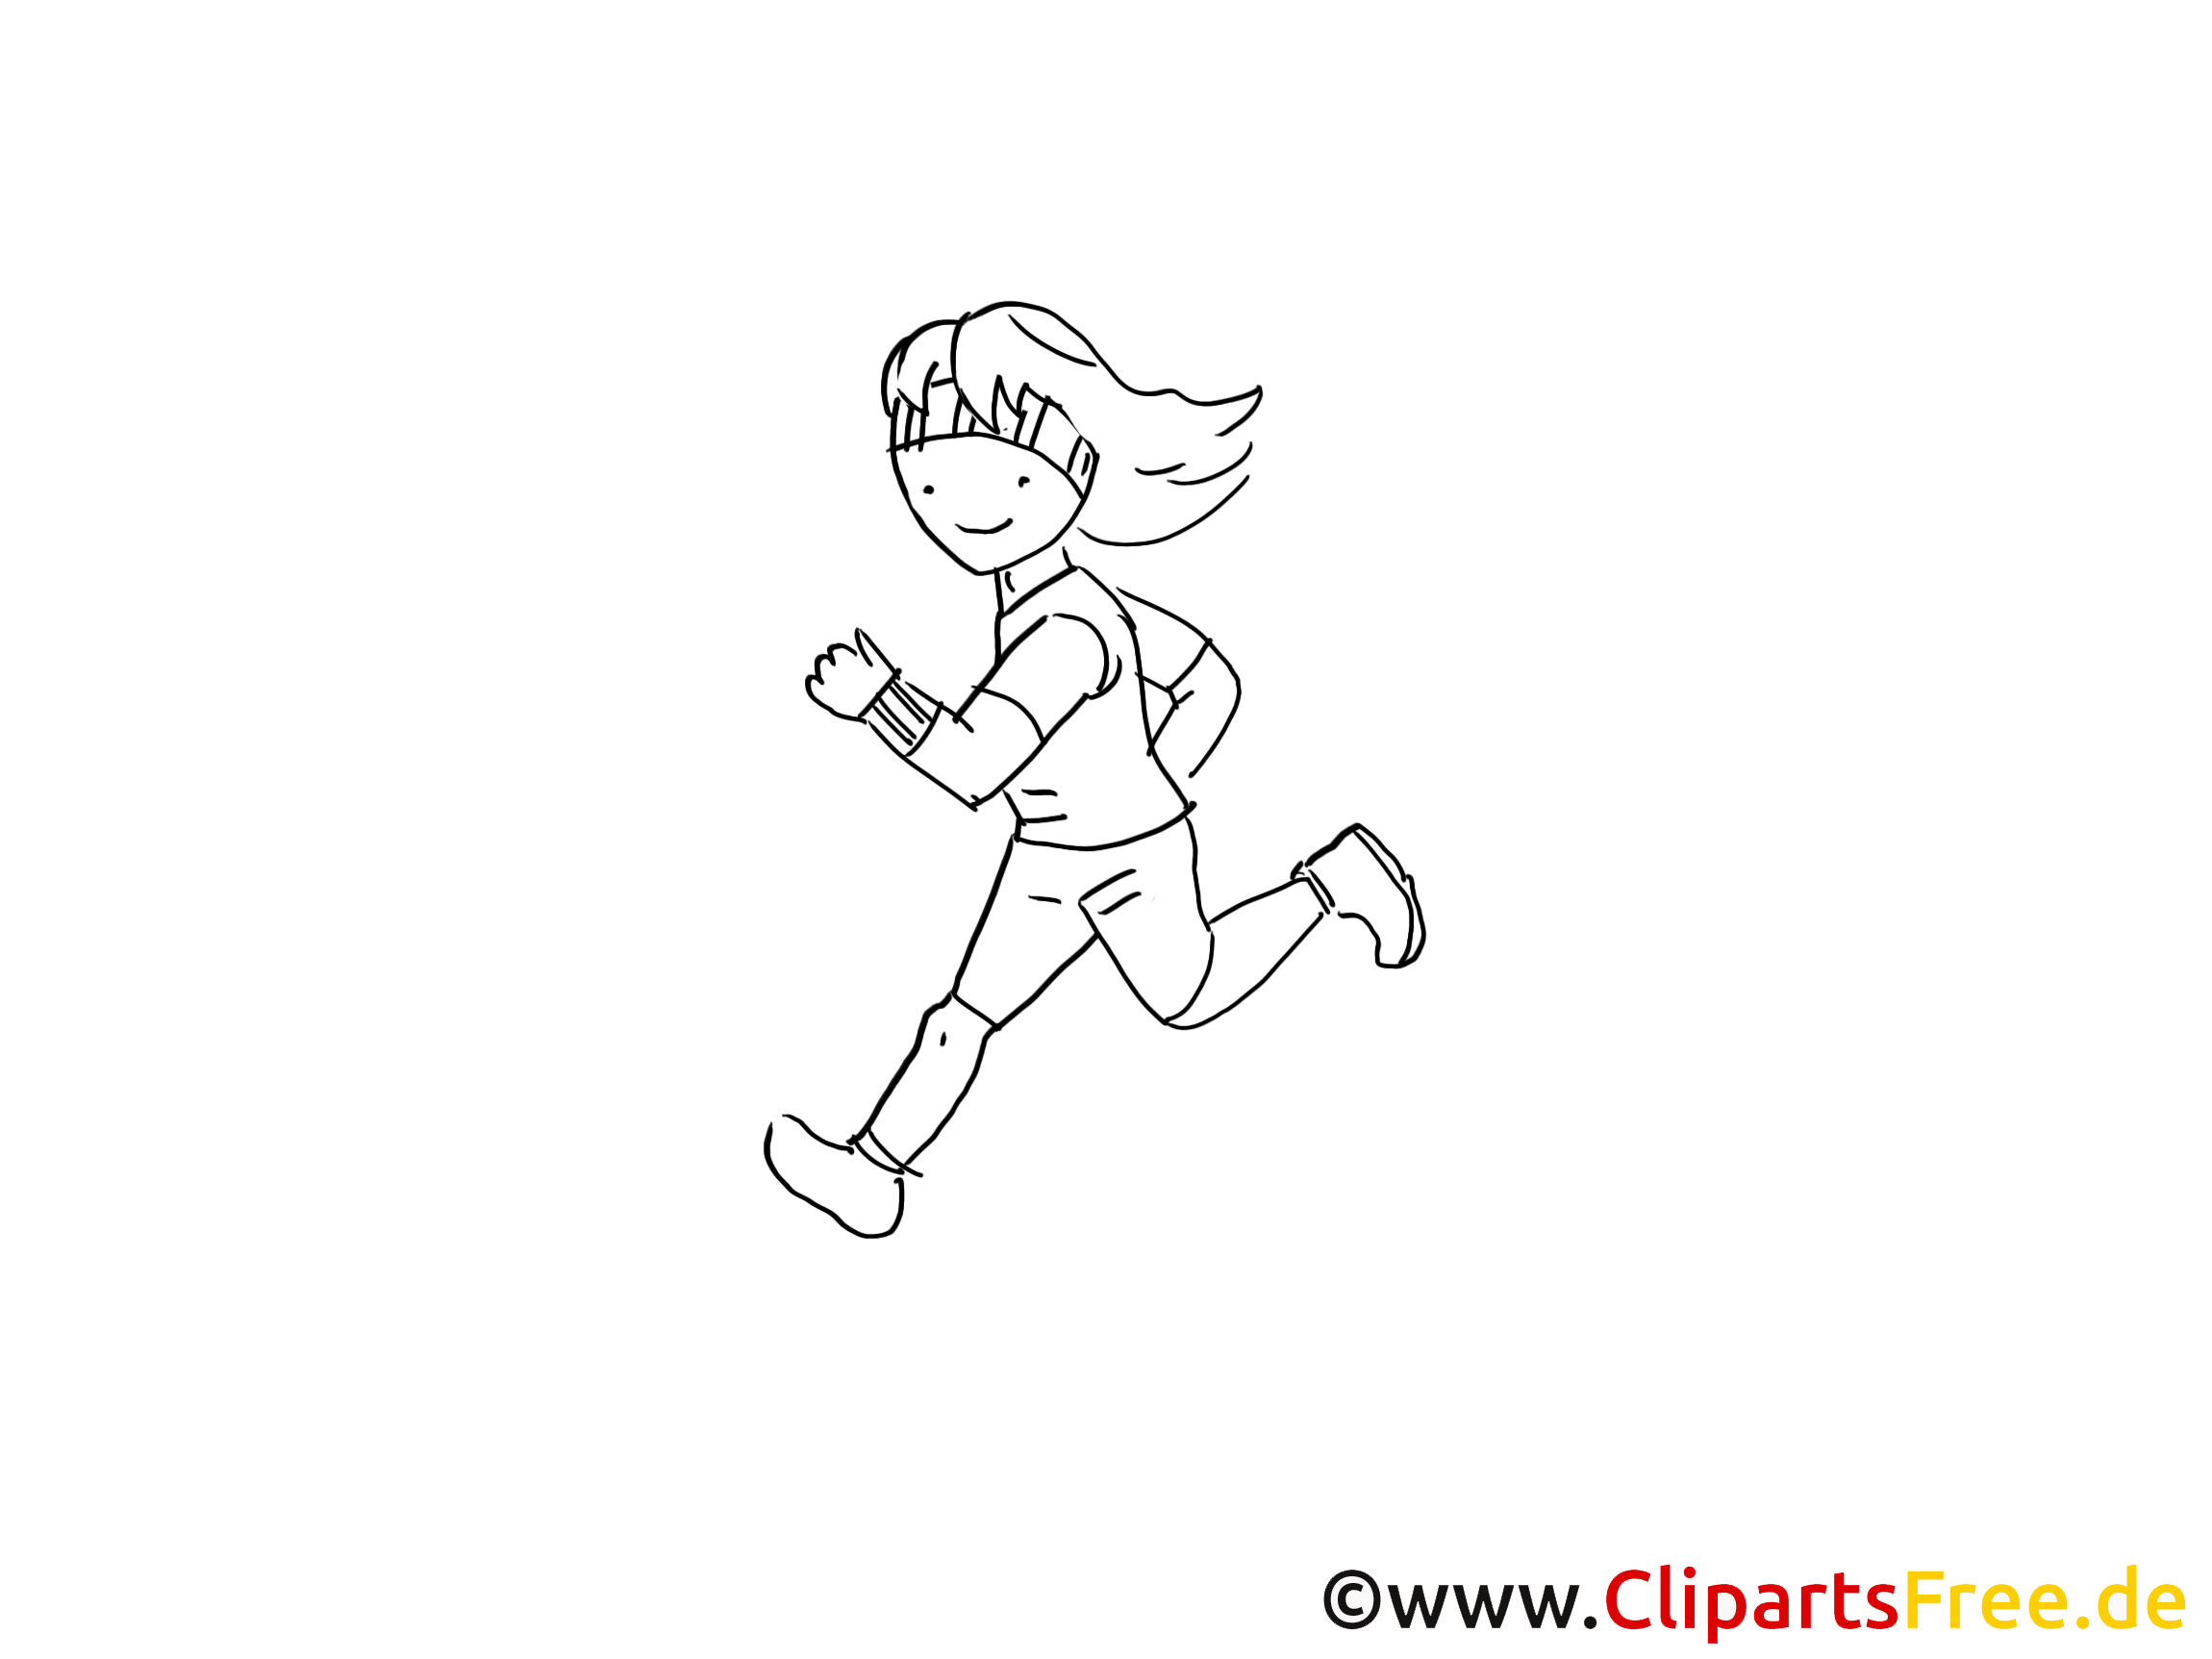 cliparts joggen - photo #48